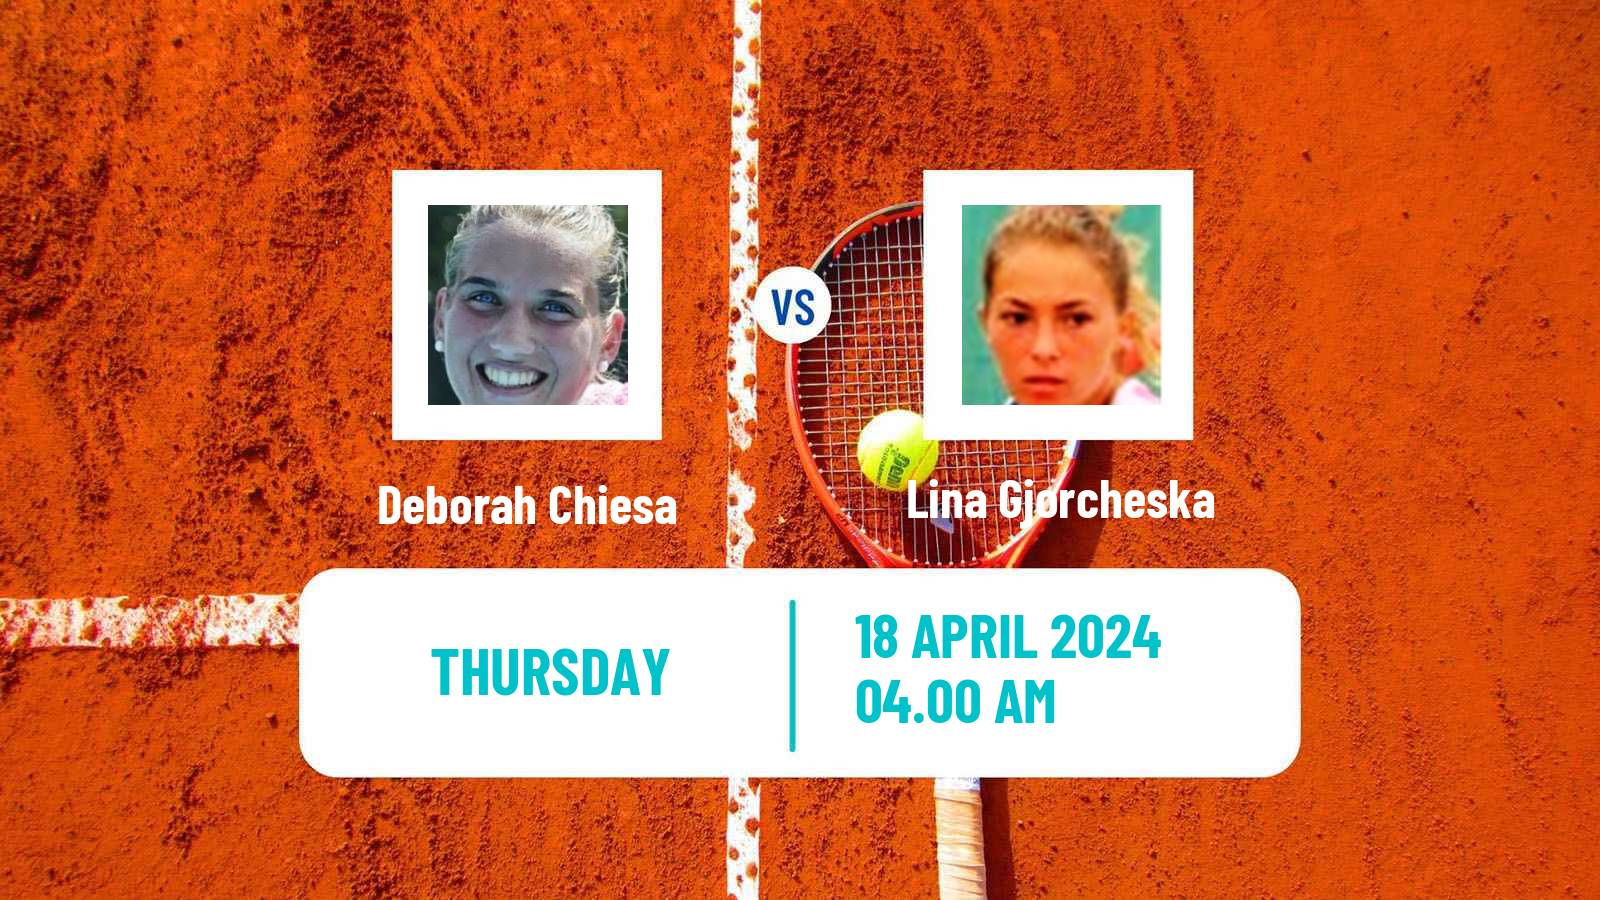 Tennis ITF W75 Koper Women Deborah Chiesa - Lina Gjorcheska